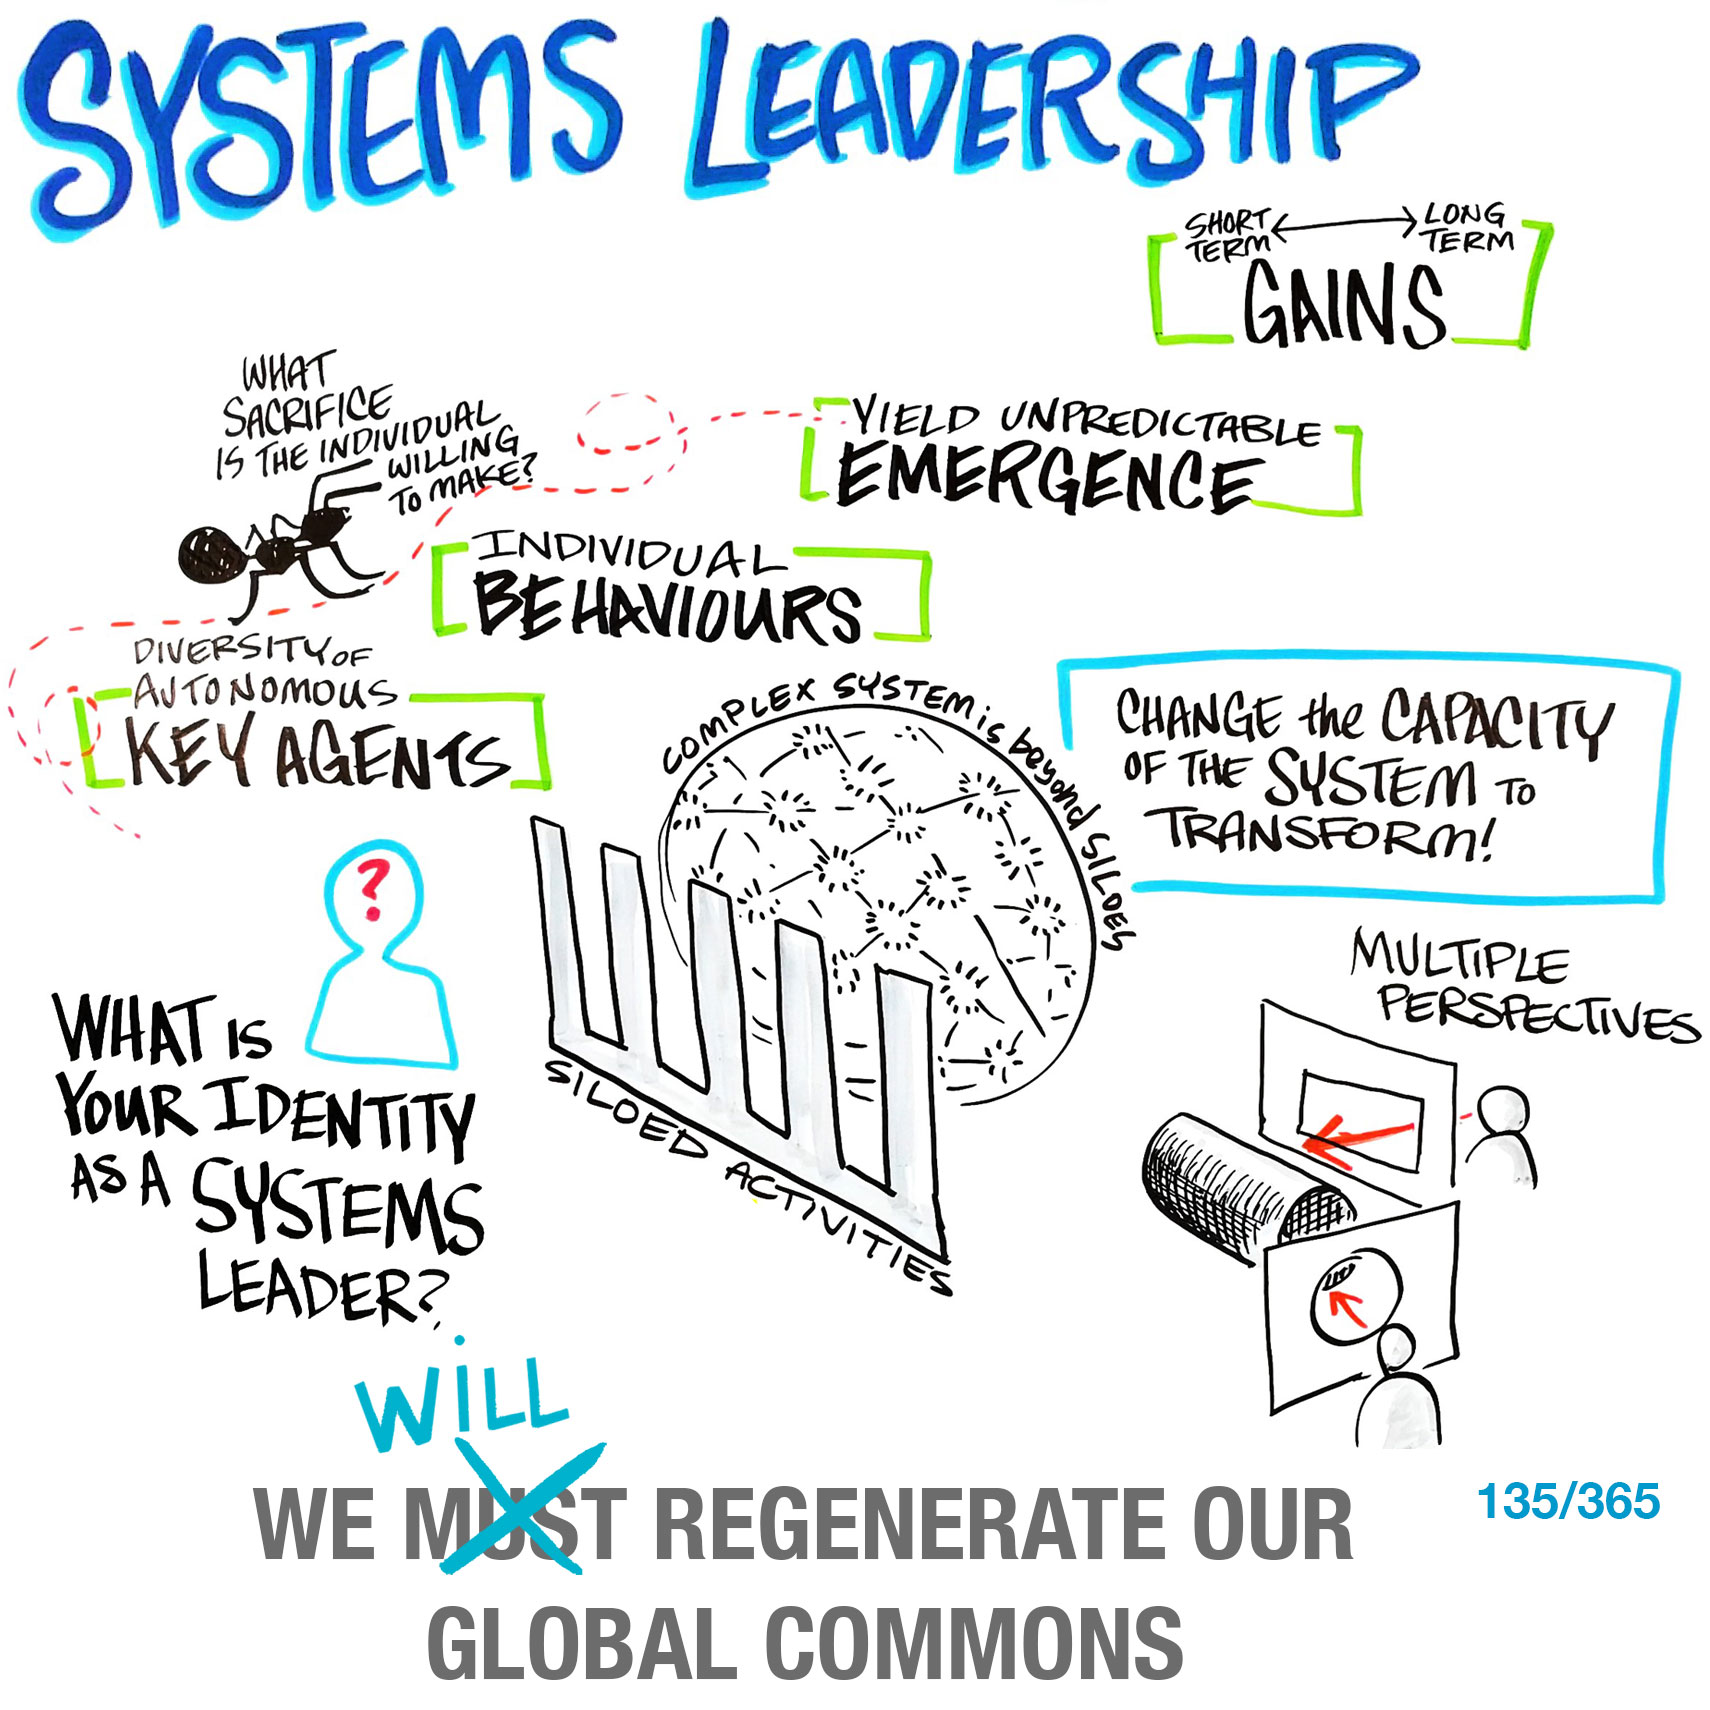 Systems Leadership